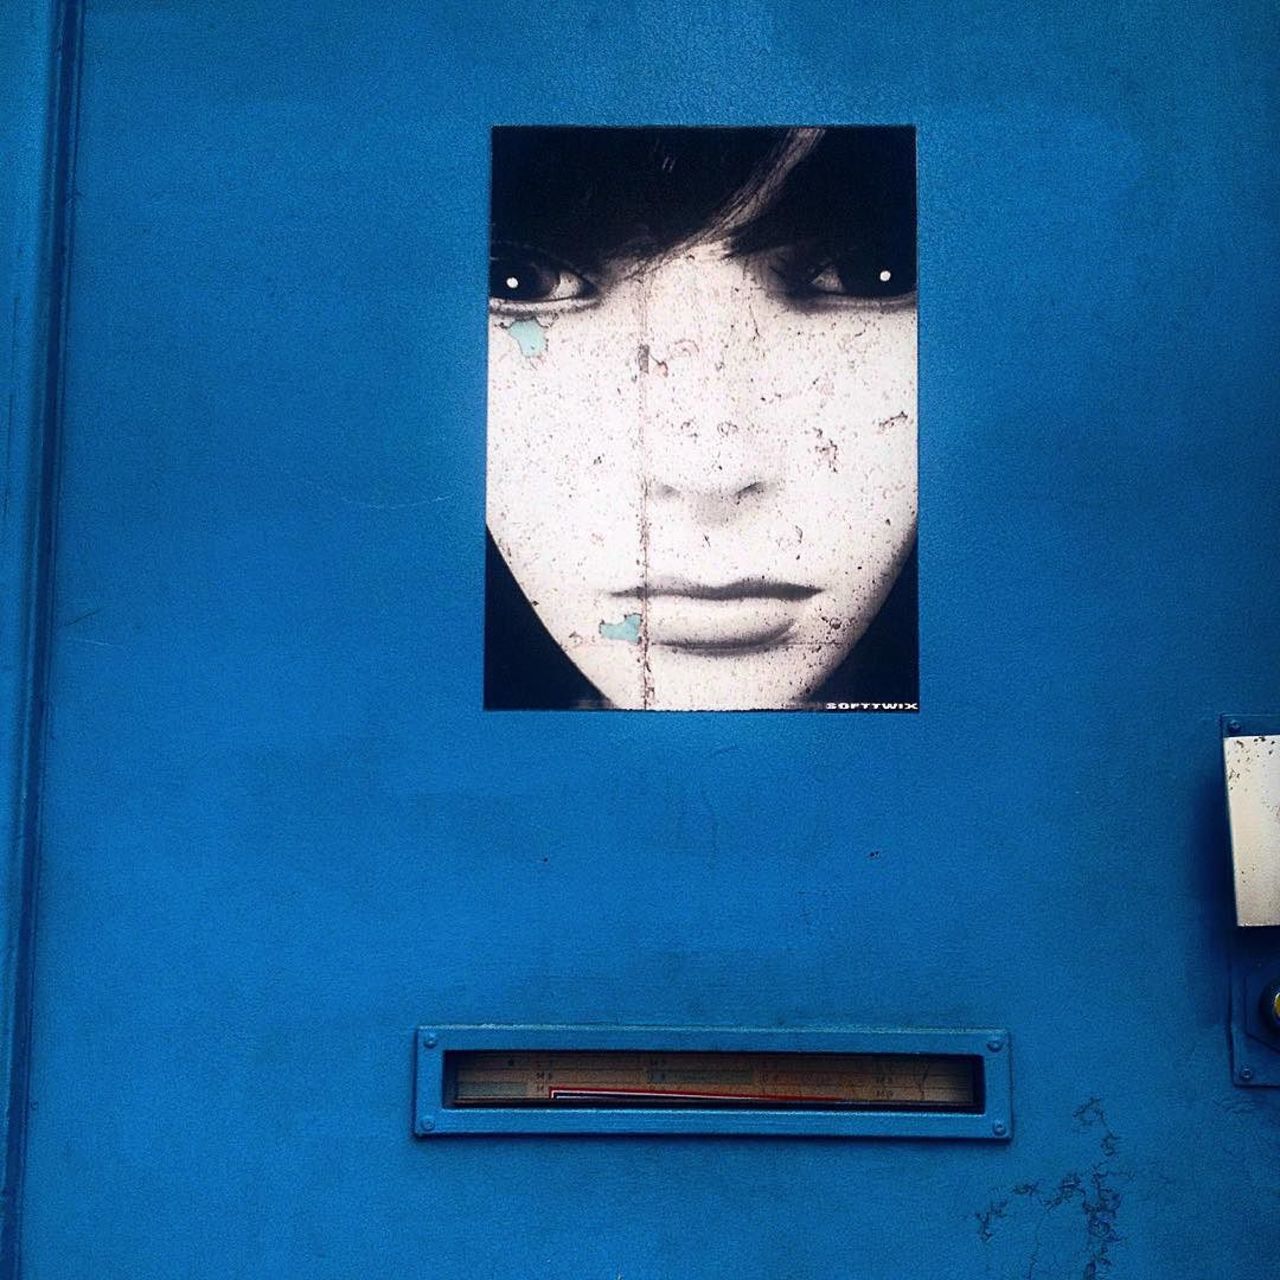 #Paris #graffiti photo by @mh2p_ http://ift.tt/205oBCG #StreetArt https://t.co/BSYyYUcM3O